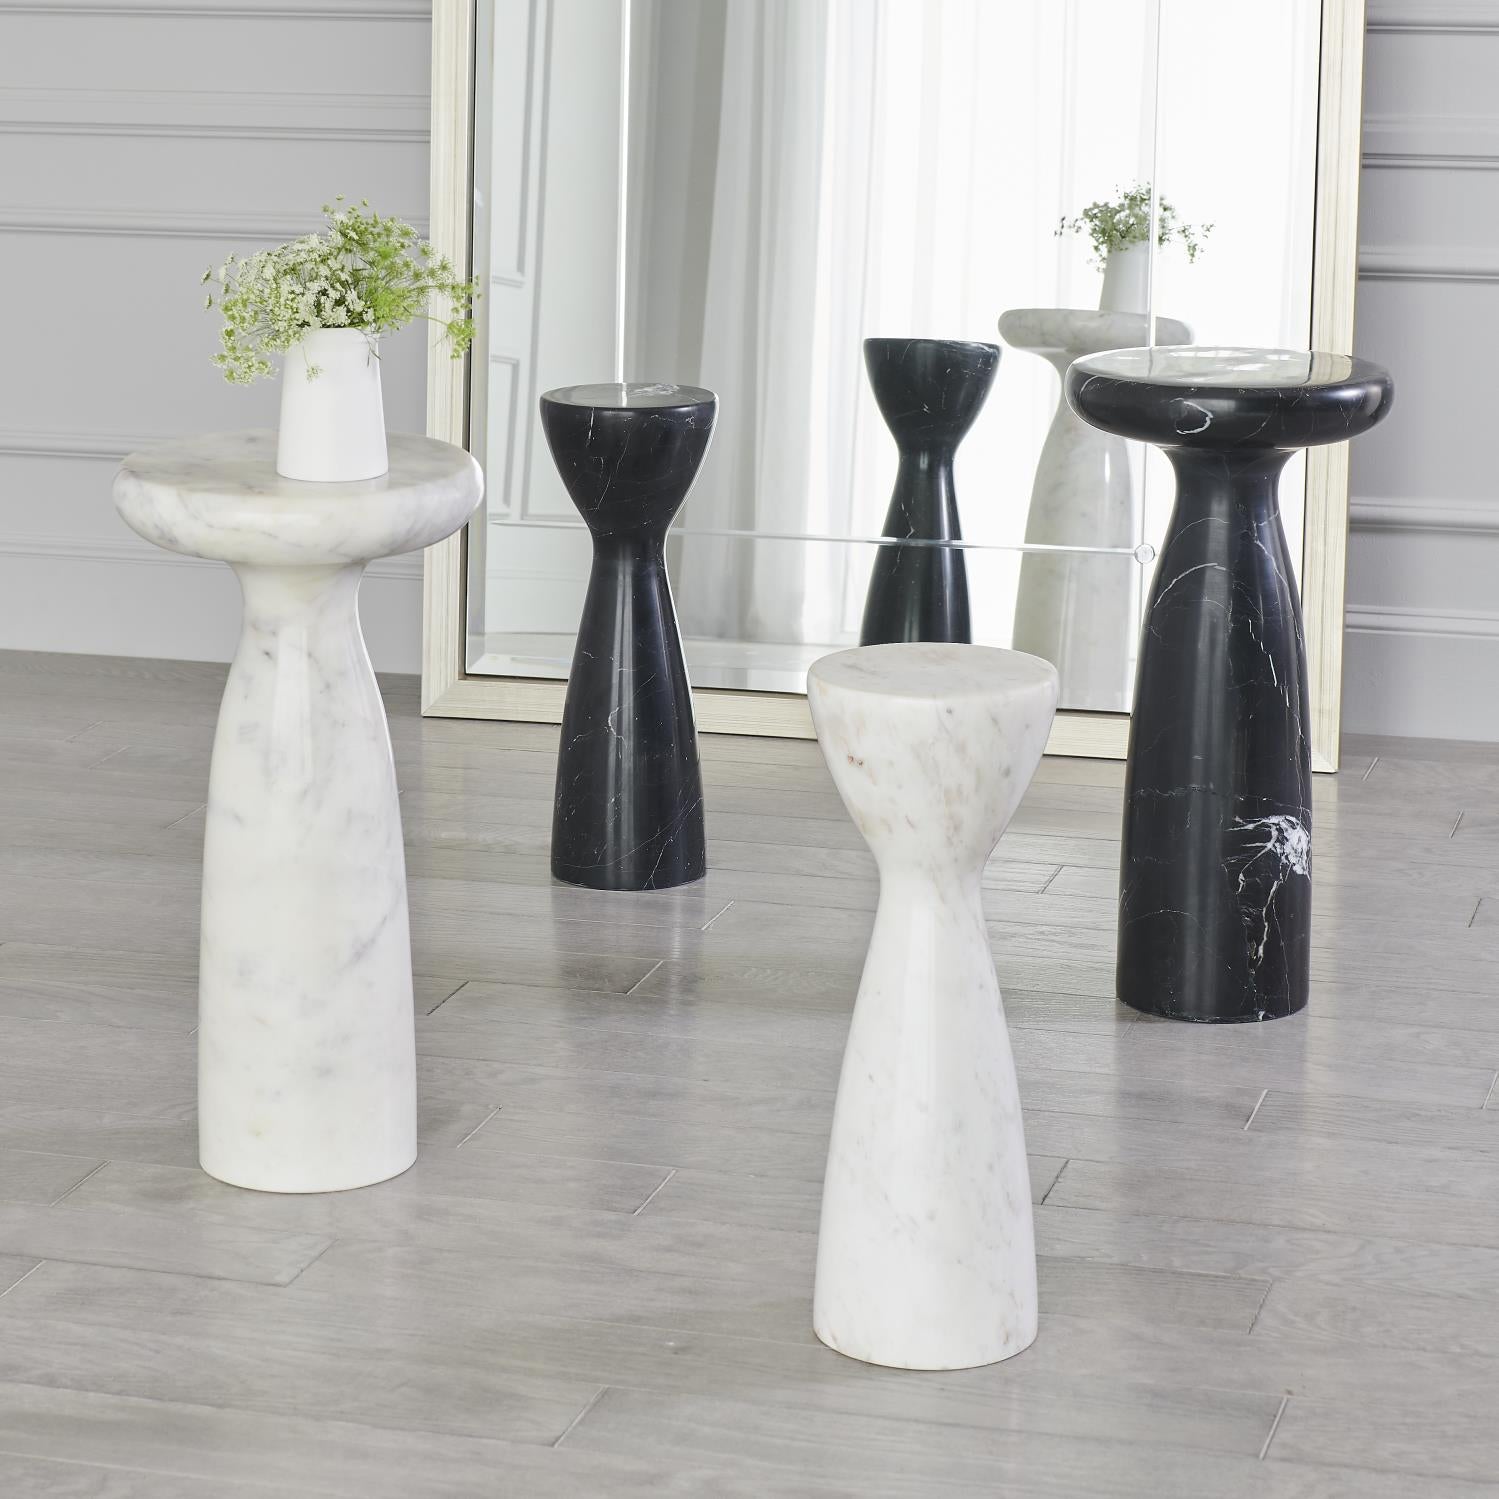 Marble Tower Table - White - Grats Decor Interior Design & Build Inc.